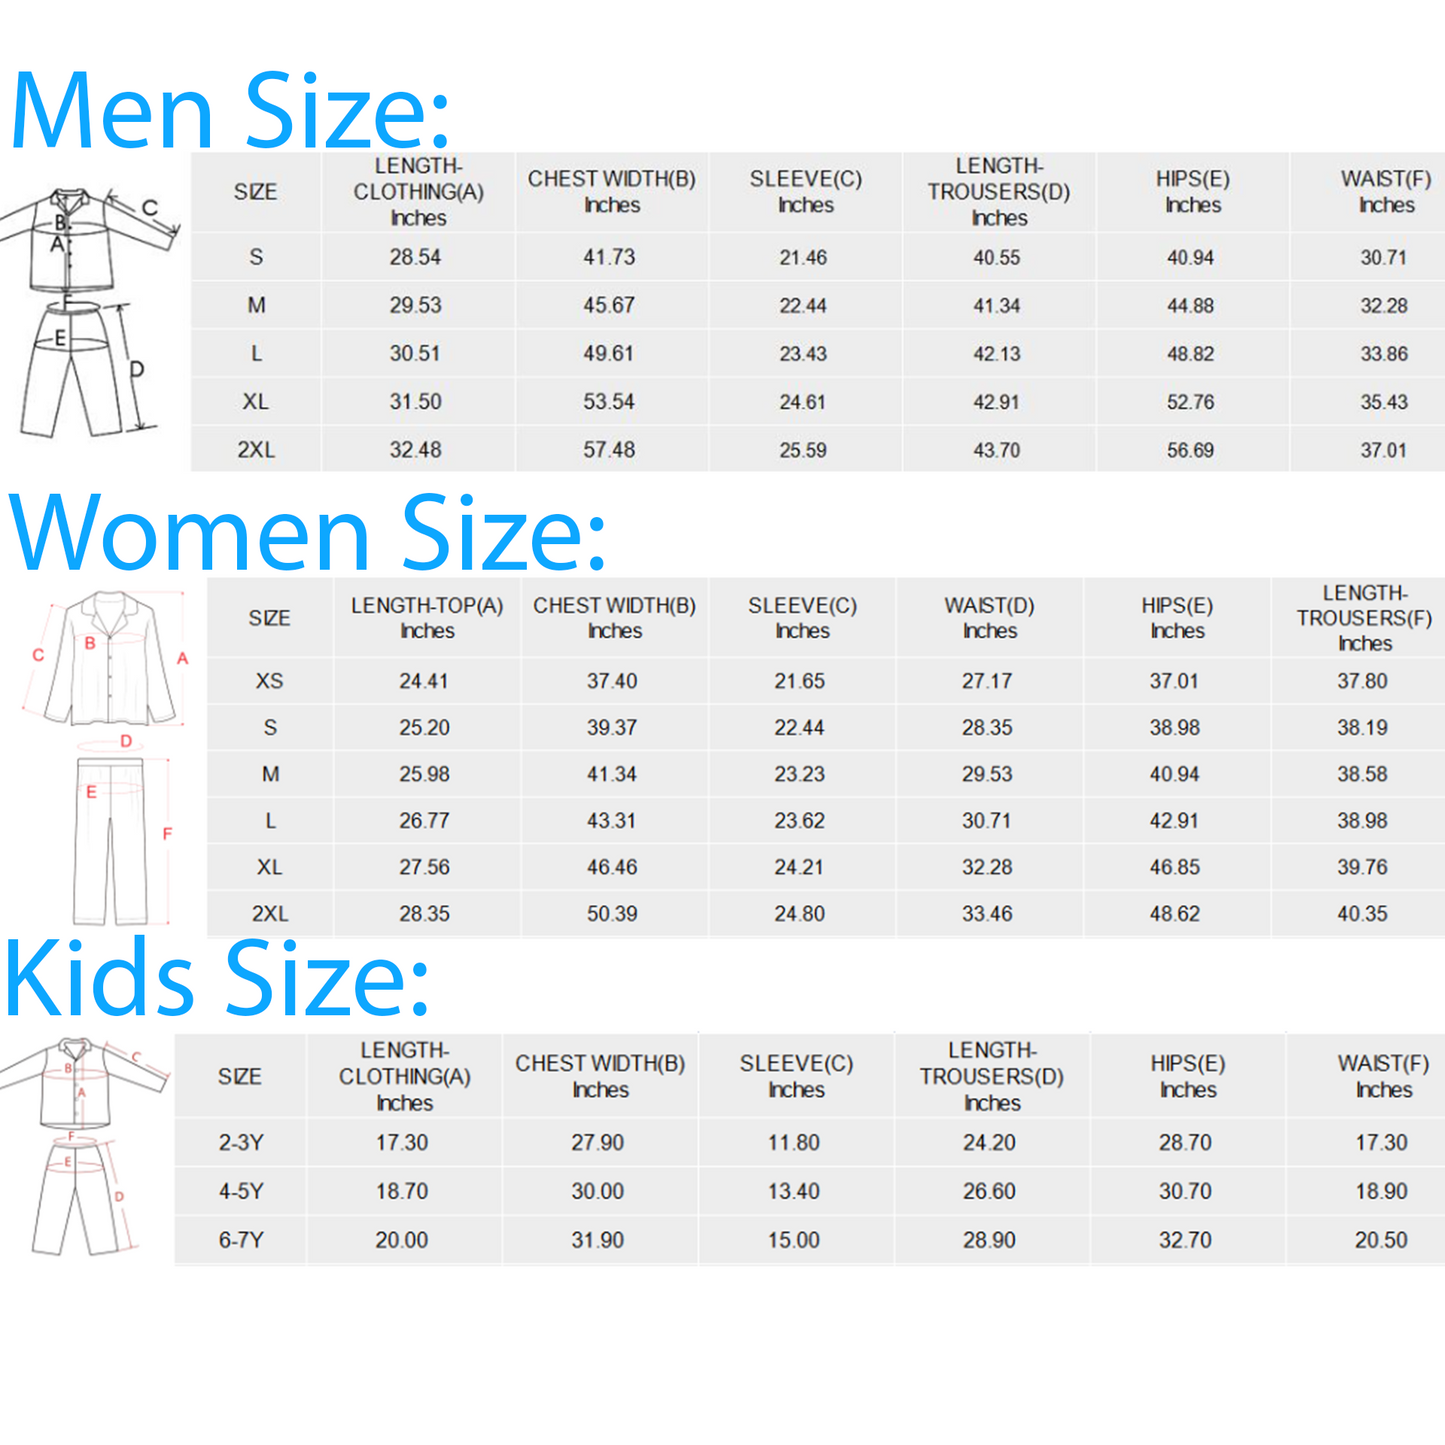 Unisex  Miata Pajama Sets women/men/kids